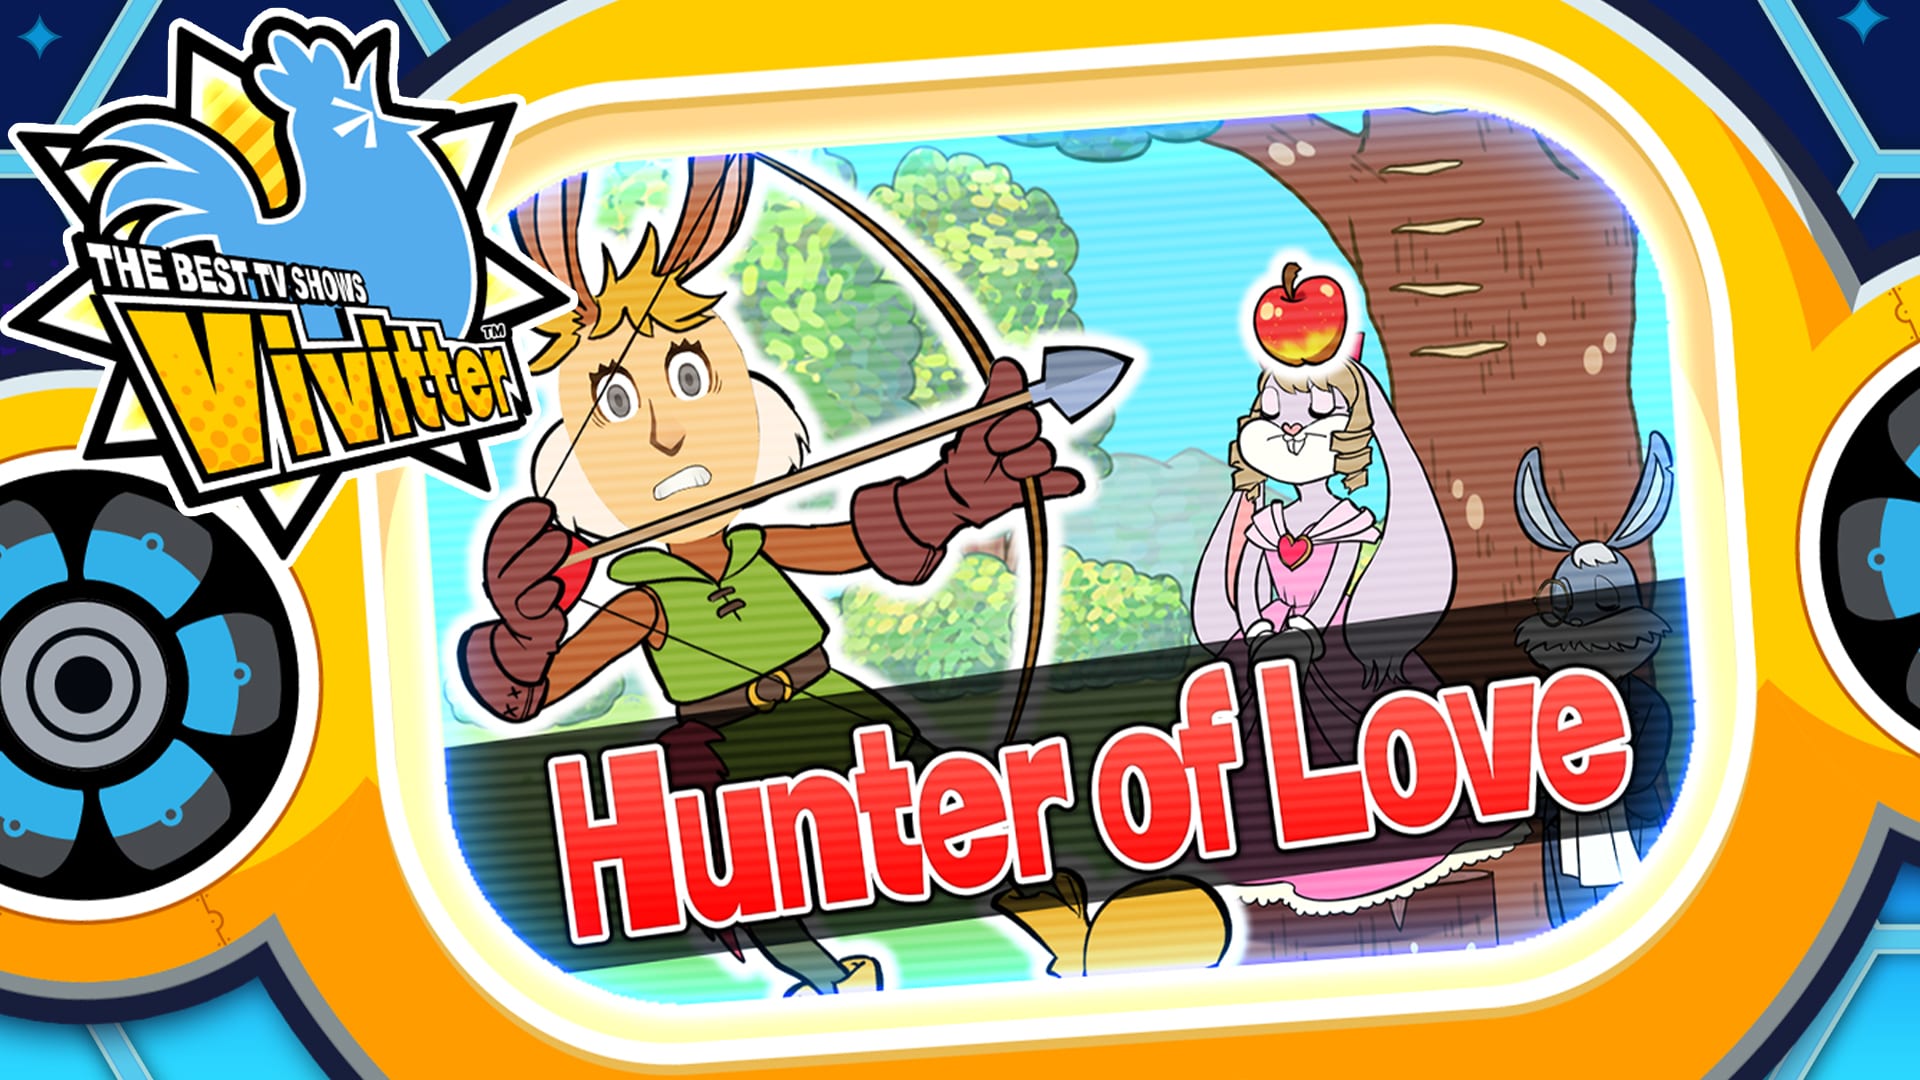 Additional mini-game "Hunter of Love"